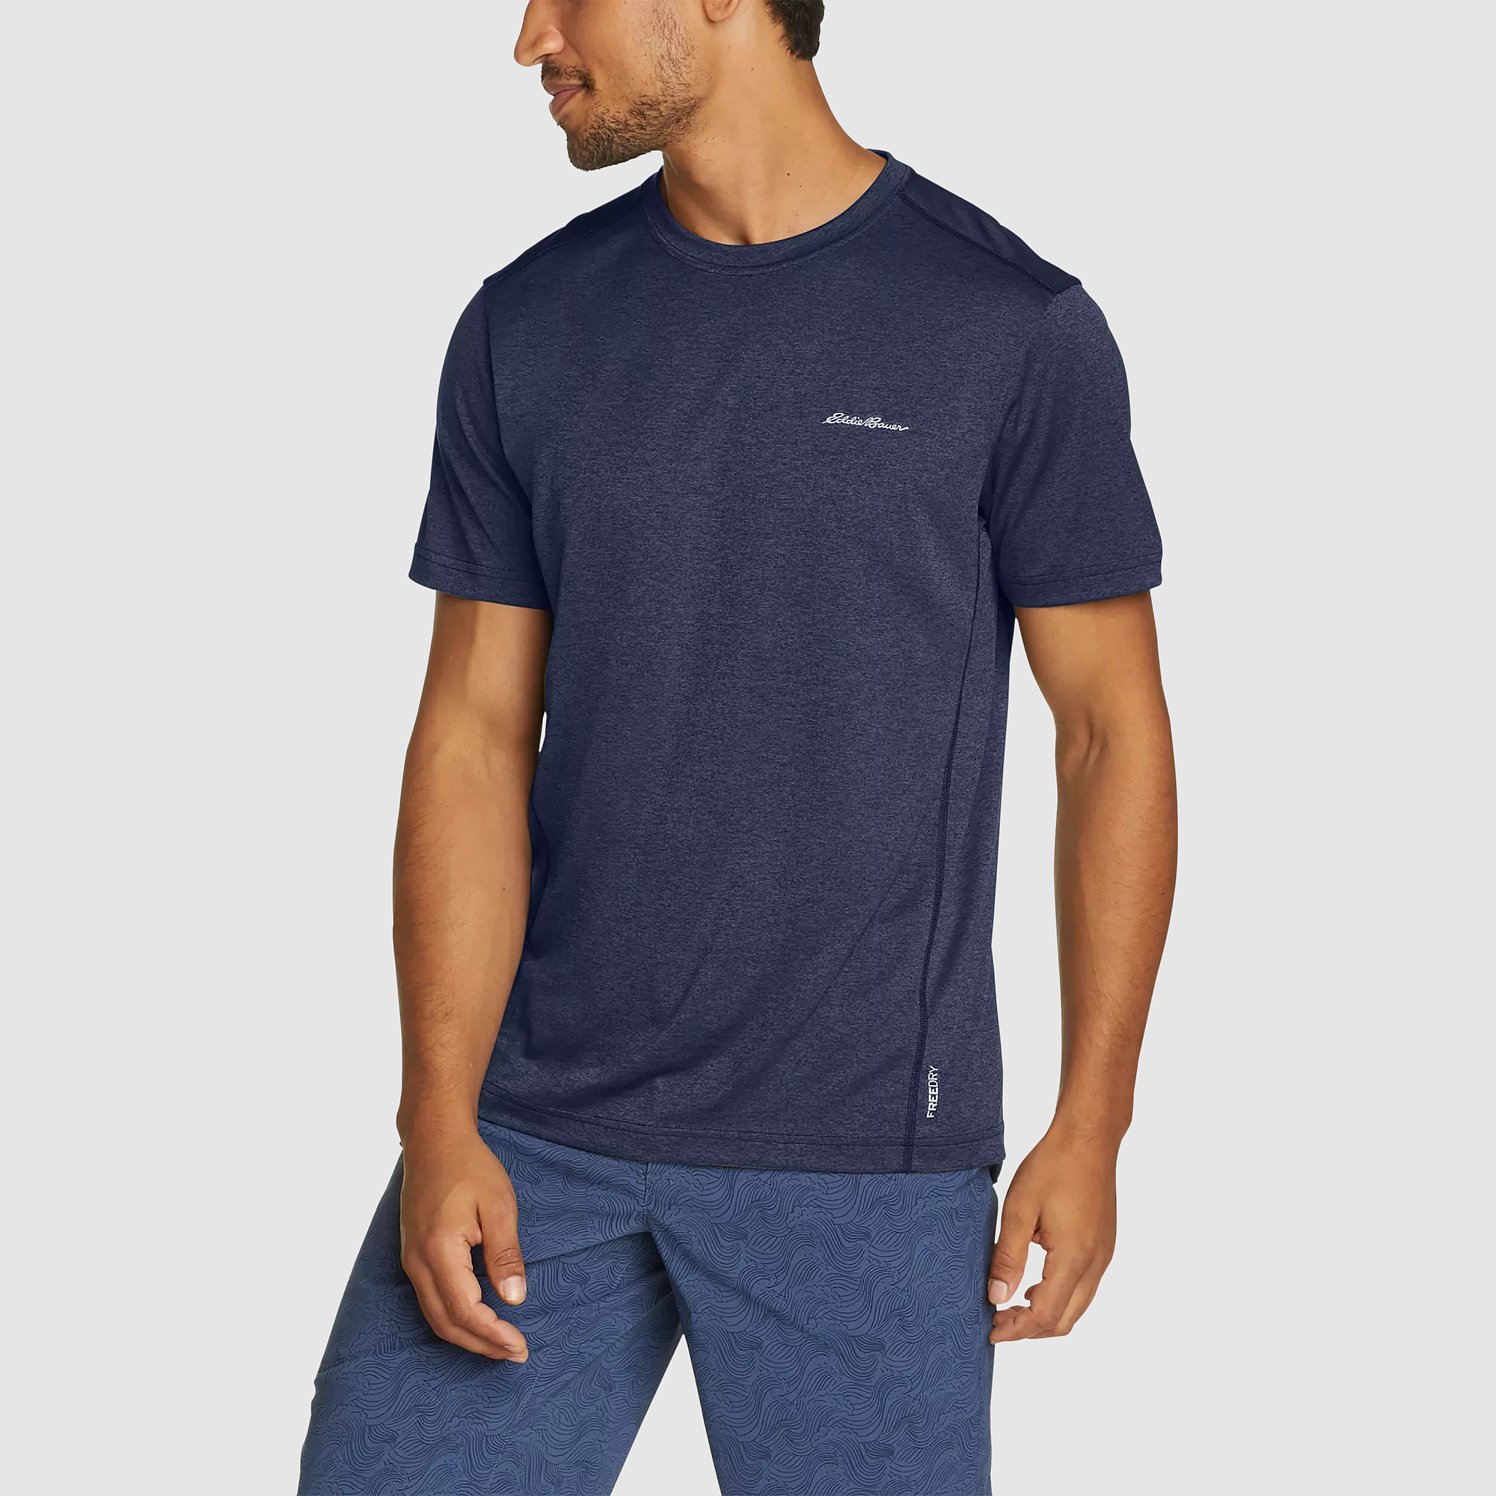 Eddie Bauer Men's HYOH Short-Sleeve T-Shirt - Med Gray - Size S